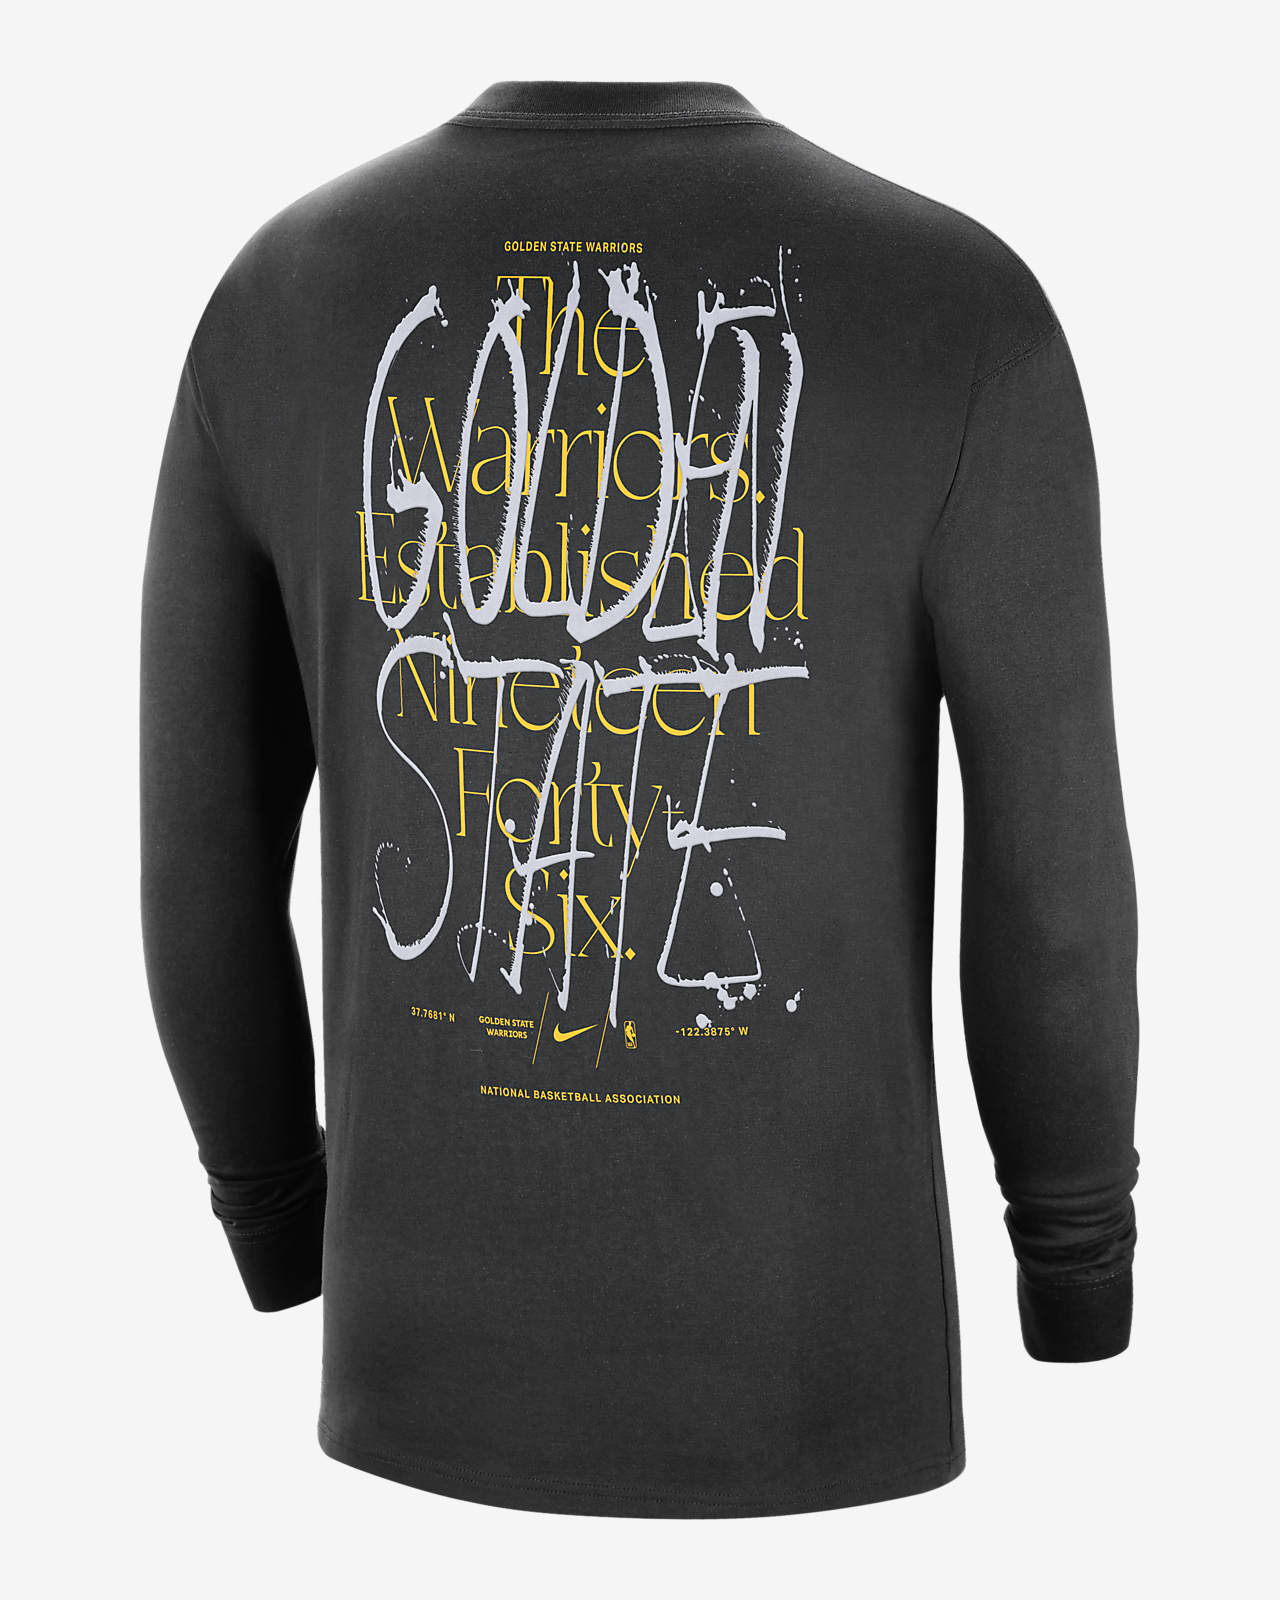 Golden State Warriors Courtside Max90 Men's Nike NBA Long-Sleeve T-Shirt